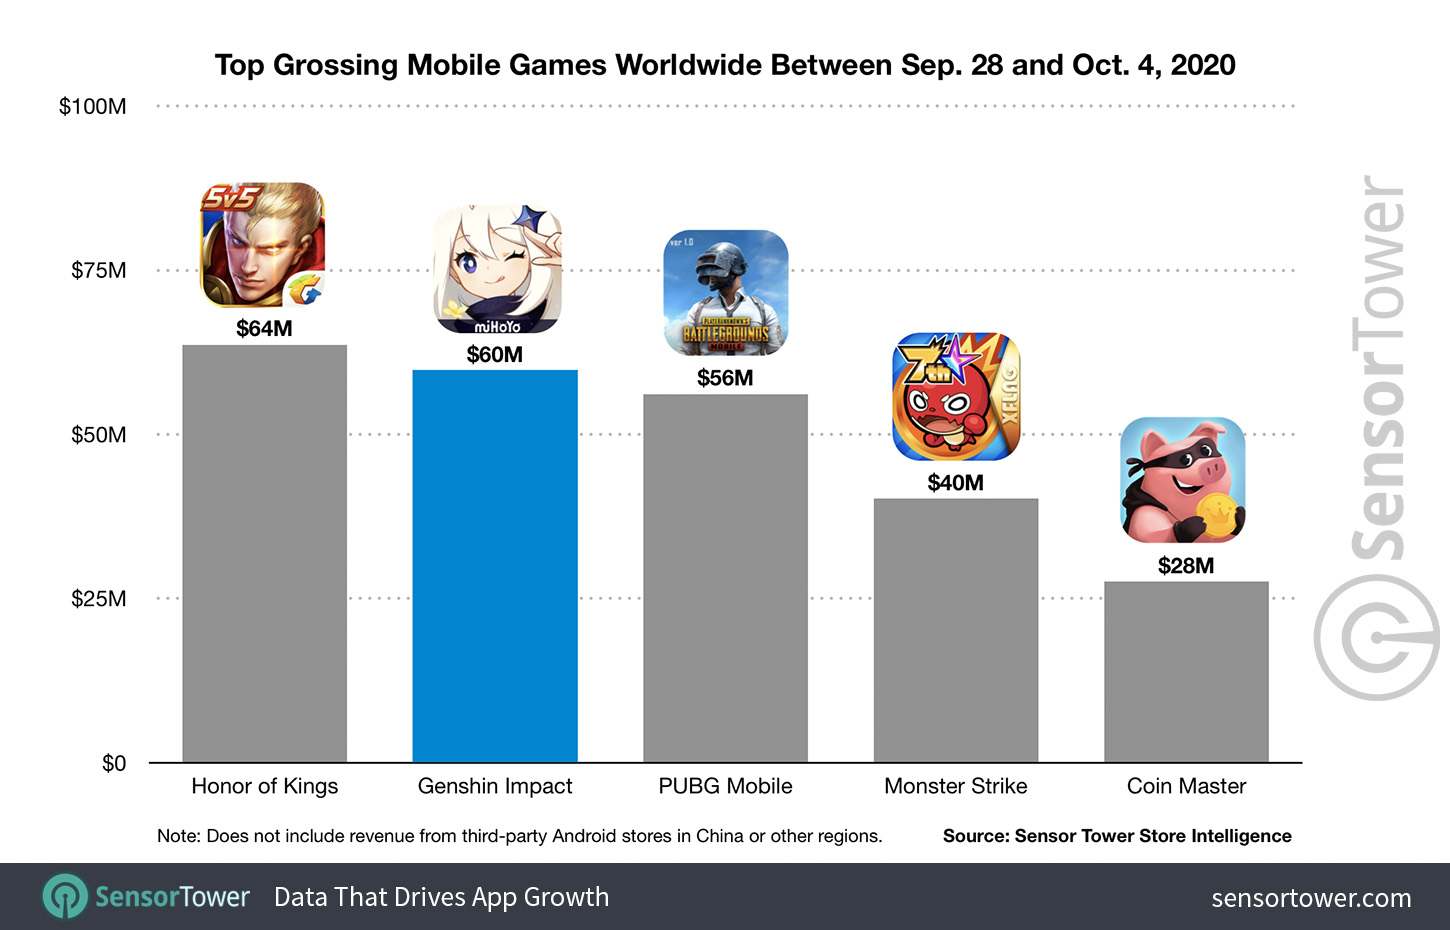 Top Grossing Mobile Games Worldwide Between September 28 and October 4 2020